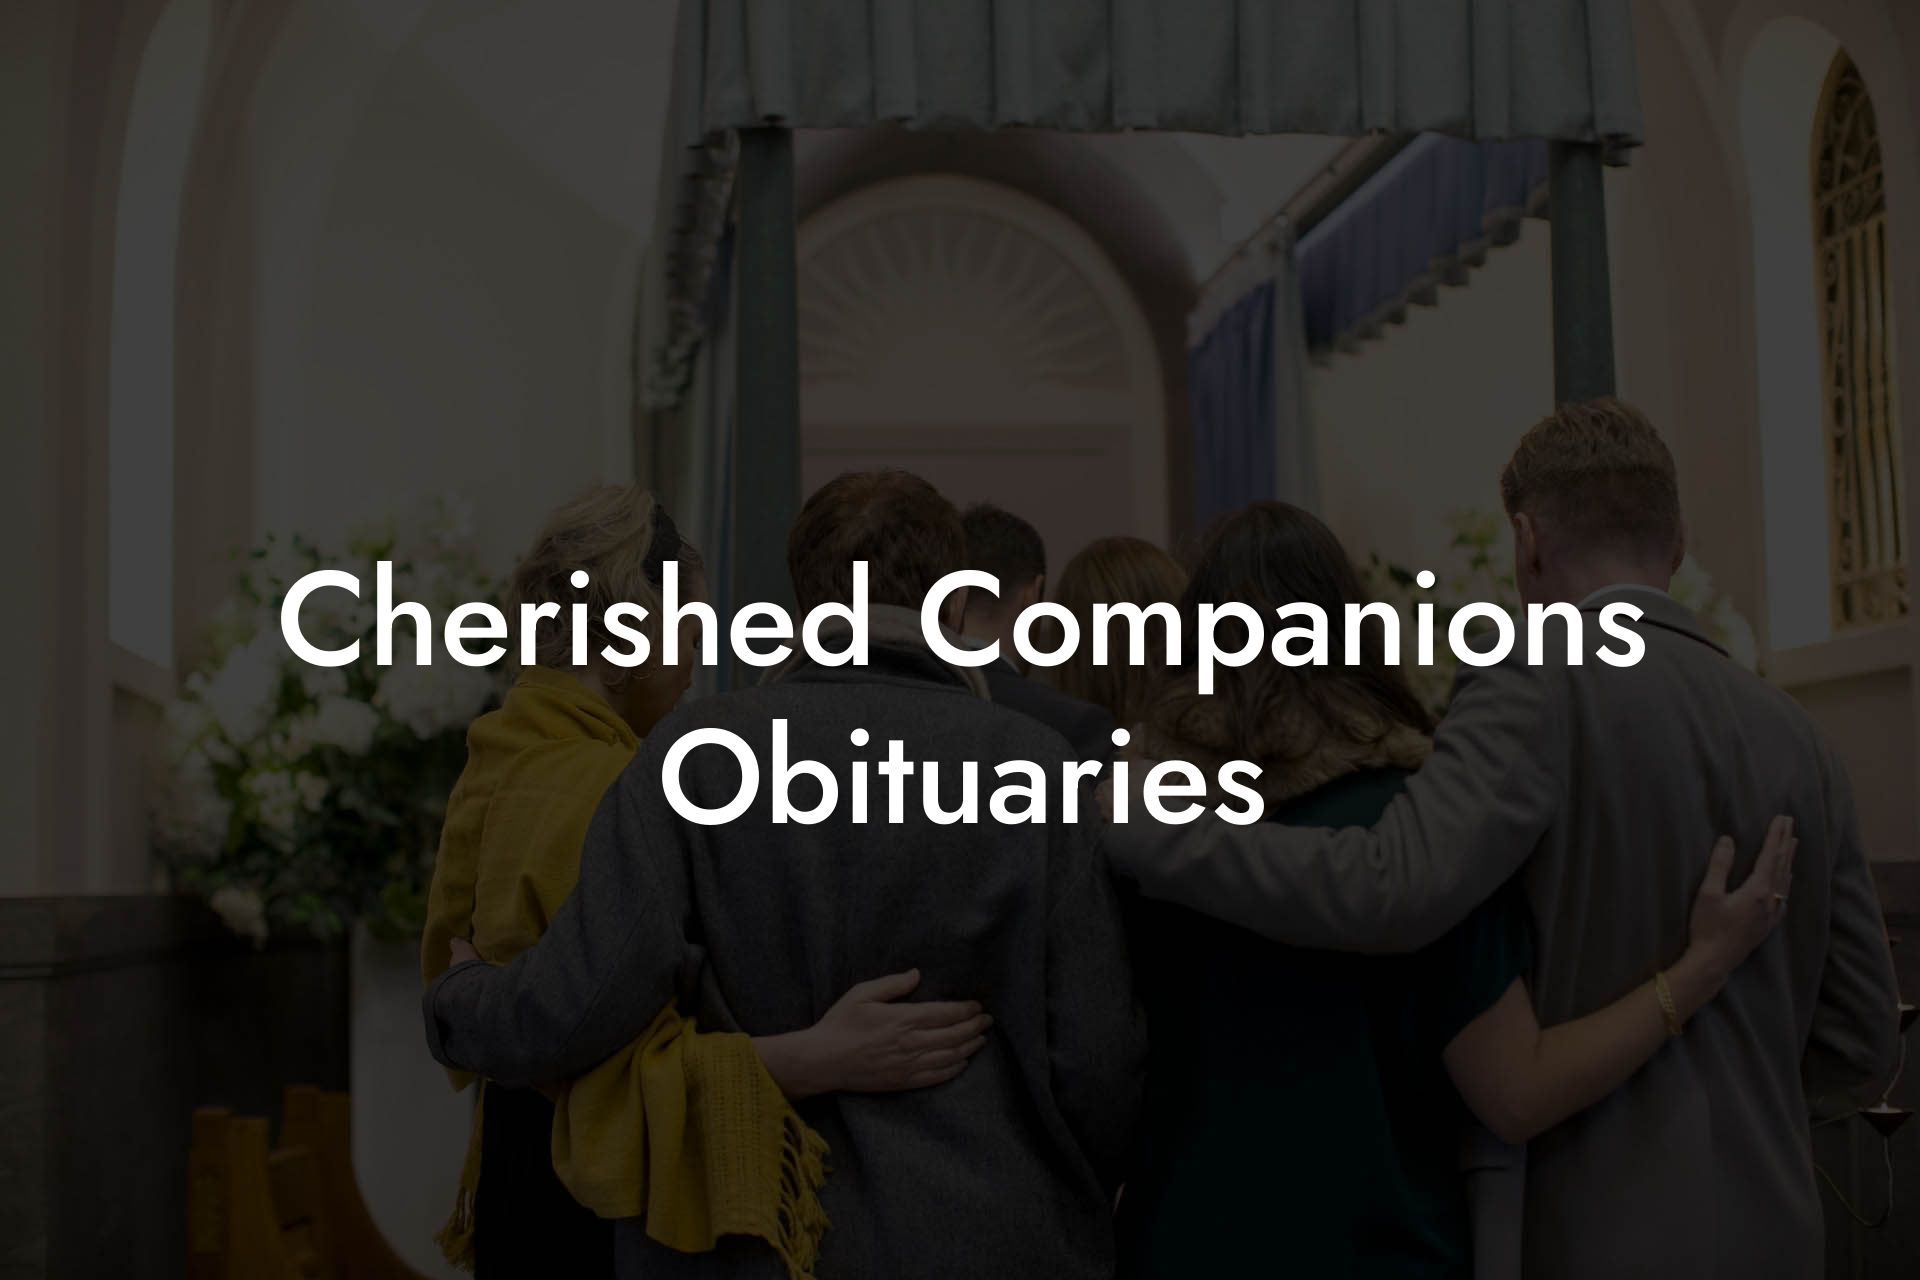 Cherished Companions Obituaries